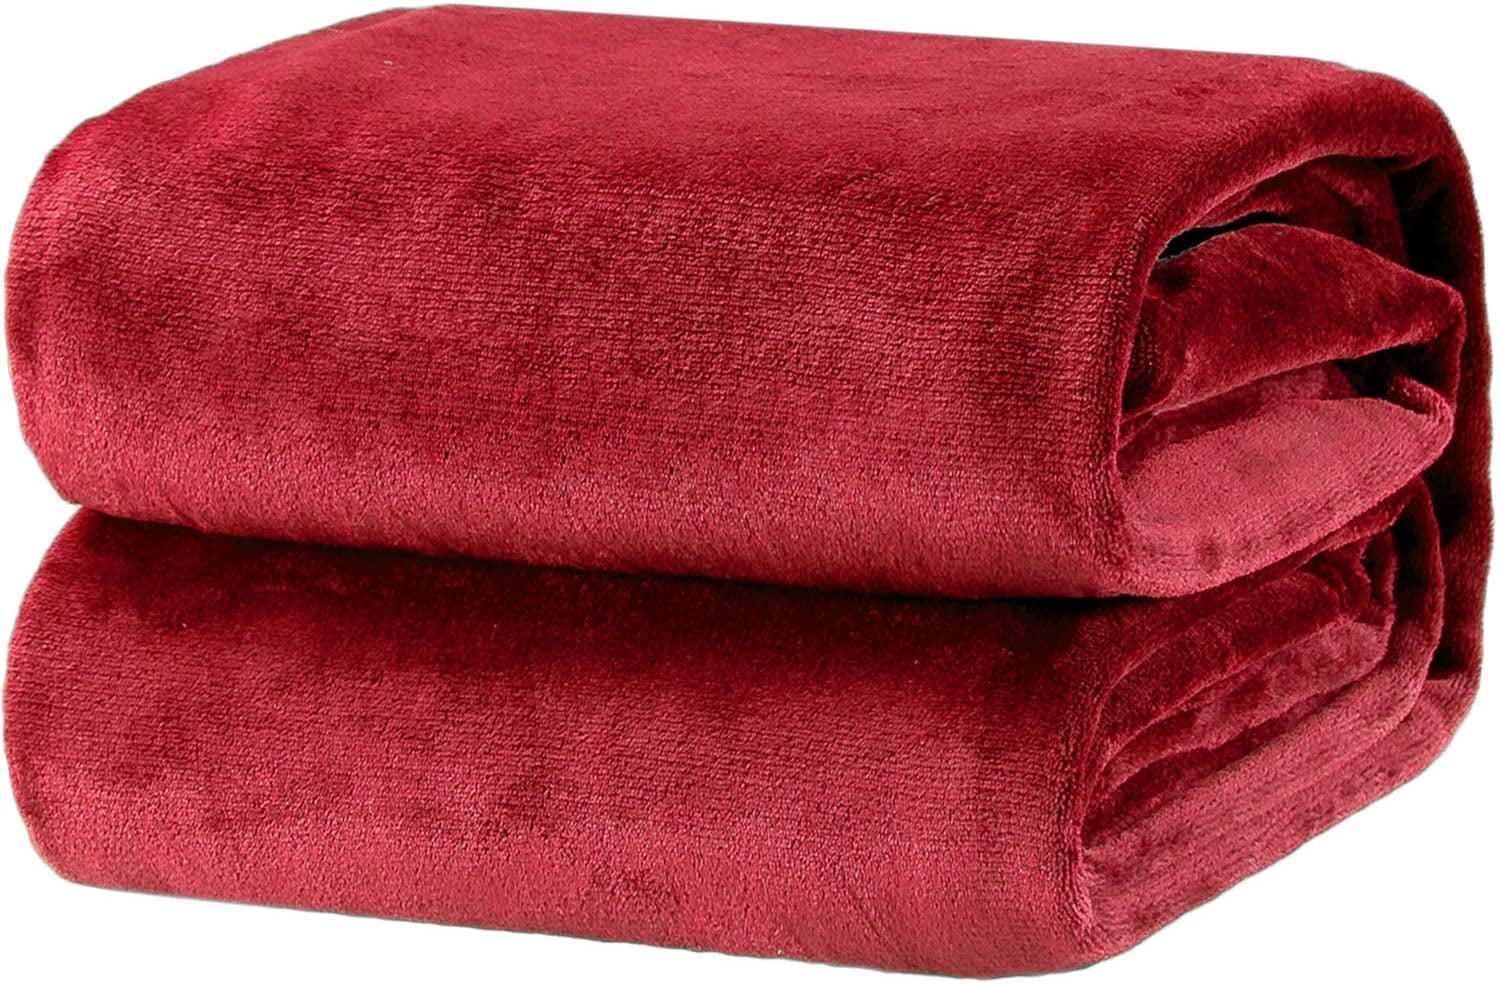 Details about   Luxury Flannel Fleece Bed Warm Reversible Blanket Super Soft Lightweight Blanket 